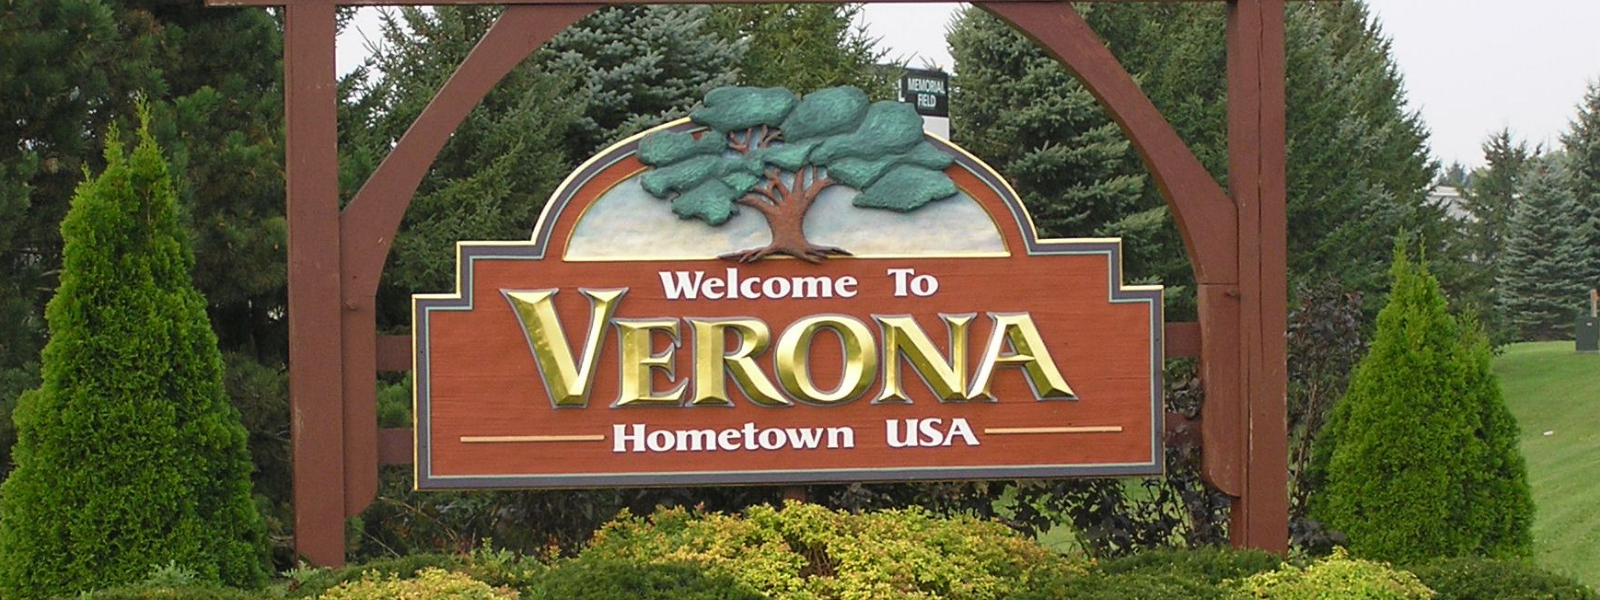 █ Getting to Know Verona Neighborhoods